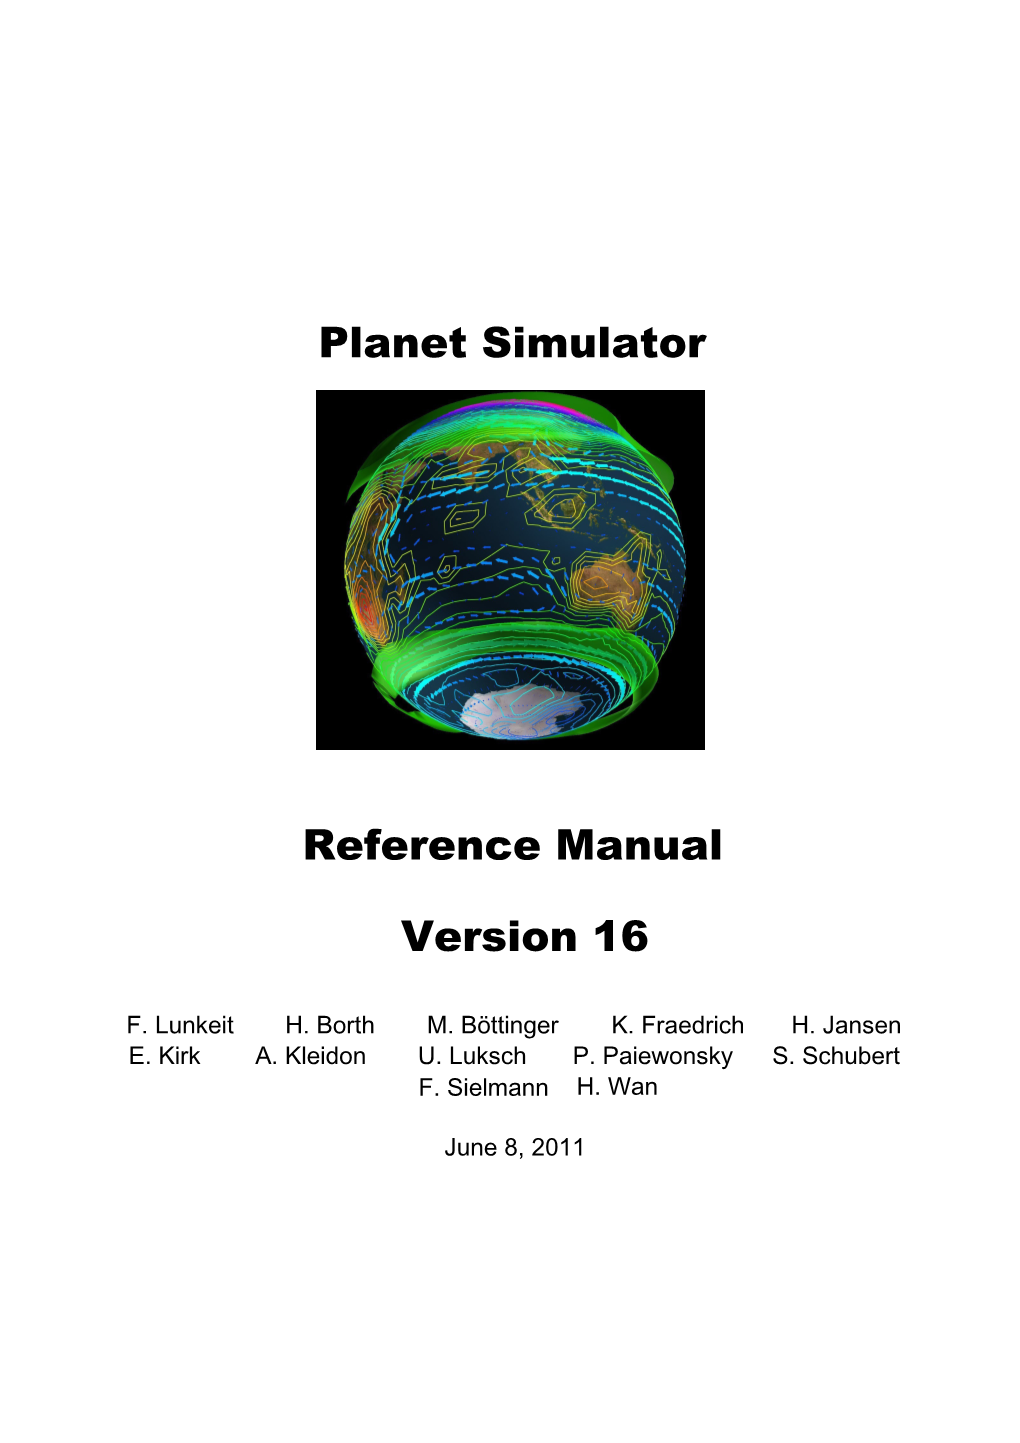 Planet Simulator Reference Manual Version 16